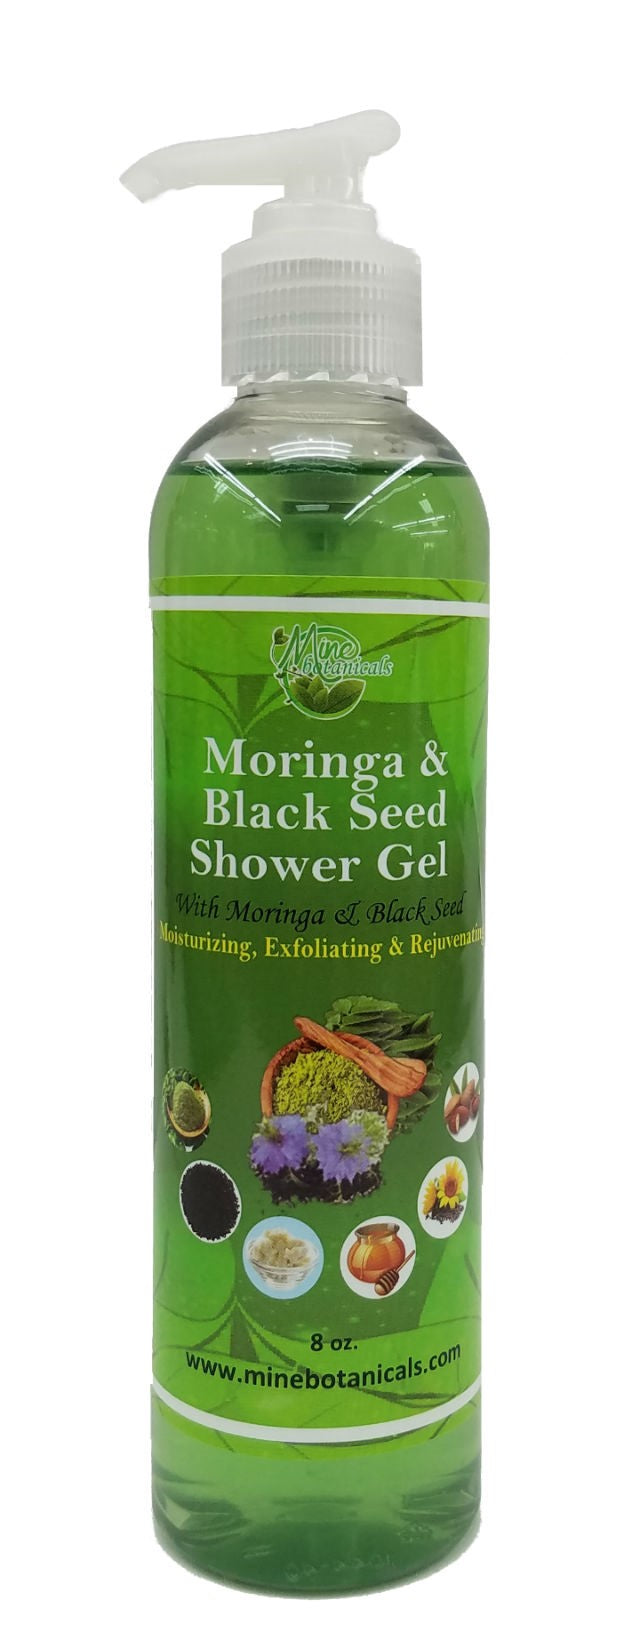 Moringa & Black Seed Shower Gel